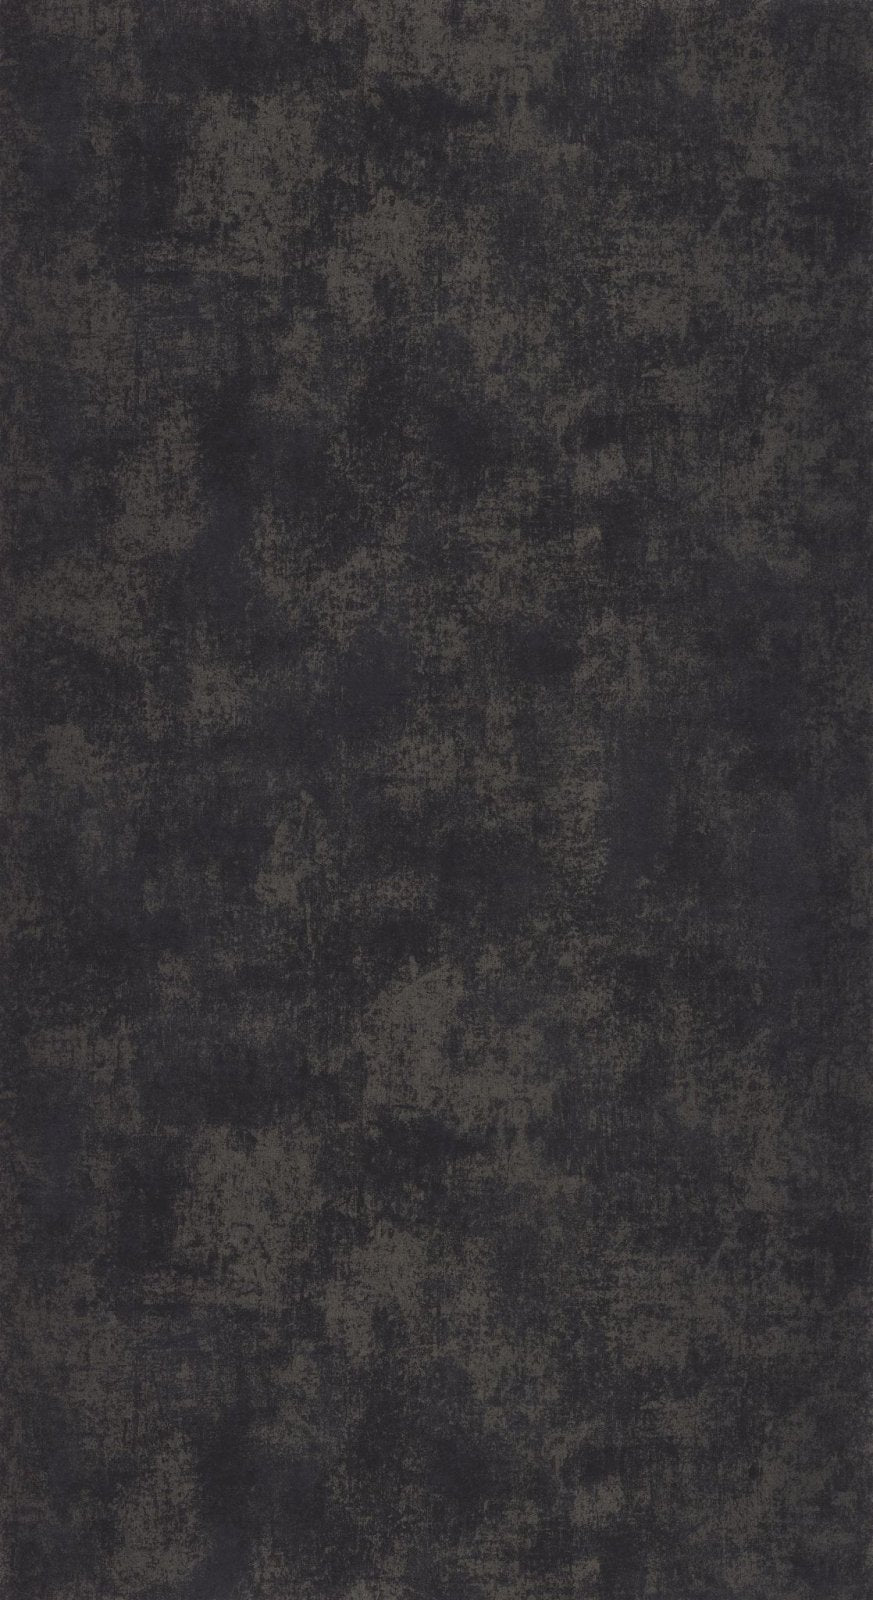 COLR80839803-Casadeco-Casadeco SO Color 5 - Stone Uni Collection - Stone Black Wallpaper-Decor Warehouse